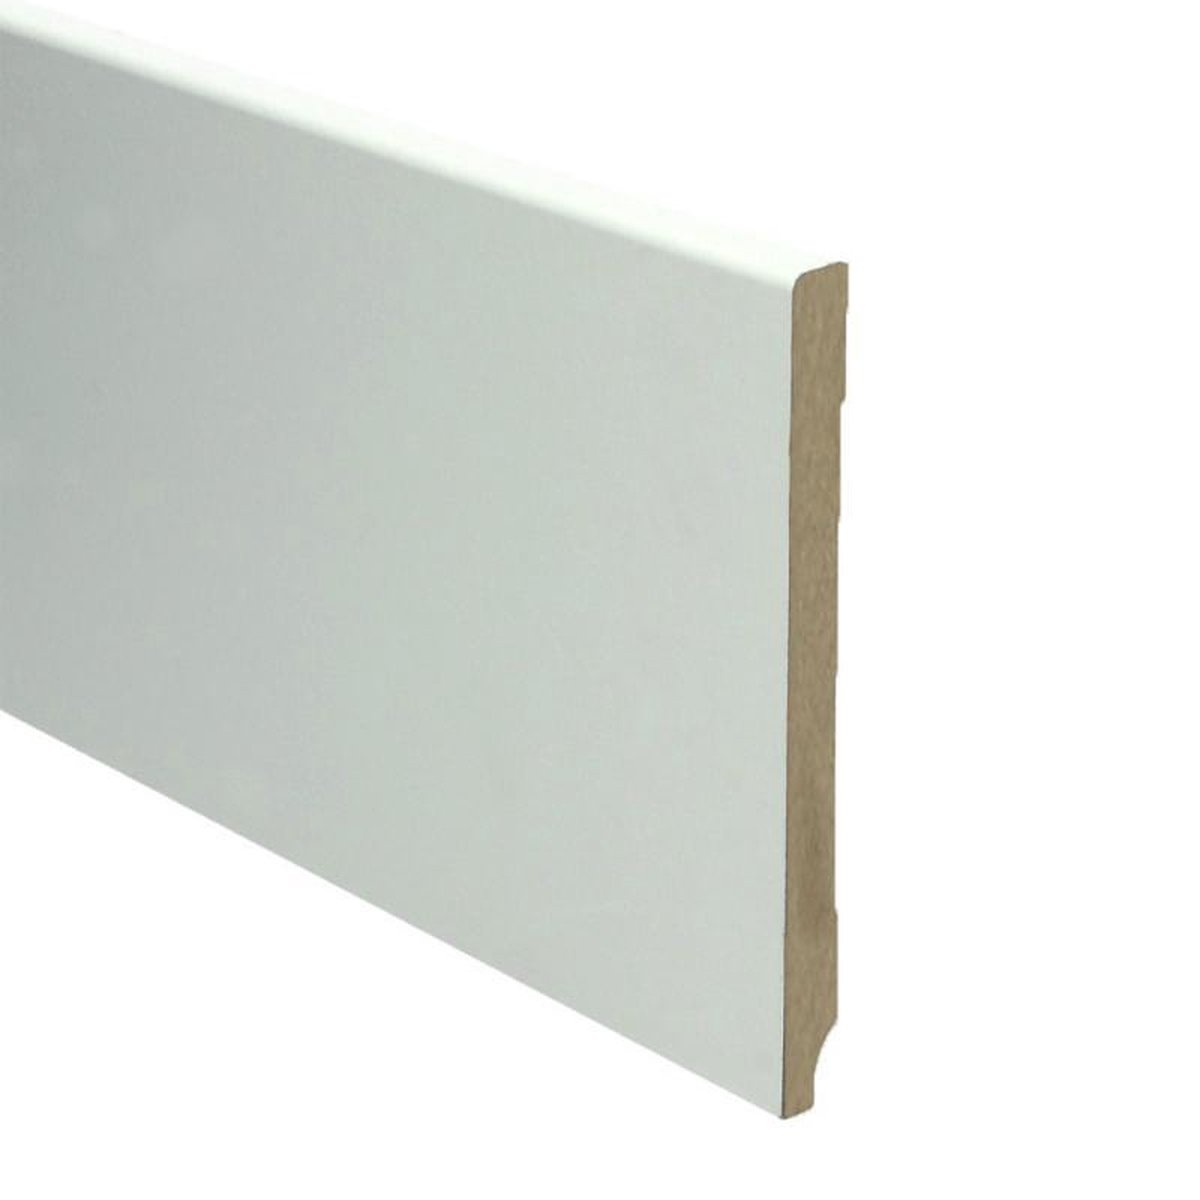 Hoge plinten - MDF - Moderne plint 150x12 mm - Wit - Voorgelakt - RAL 9010 - Per 5 stuks 2,4m